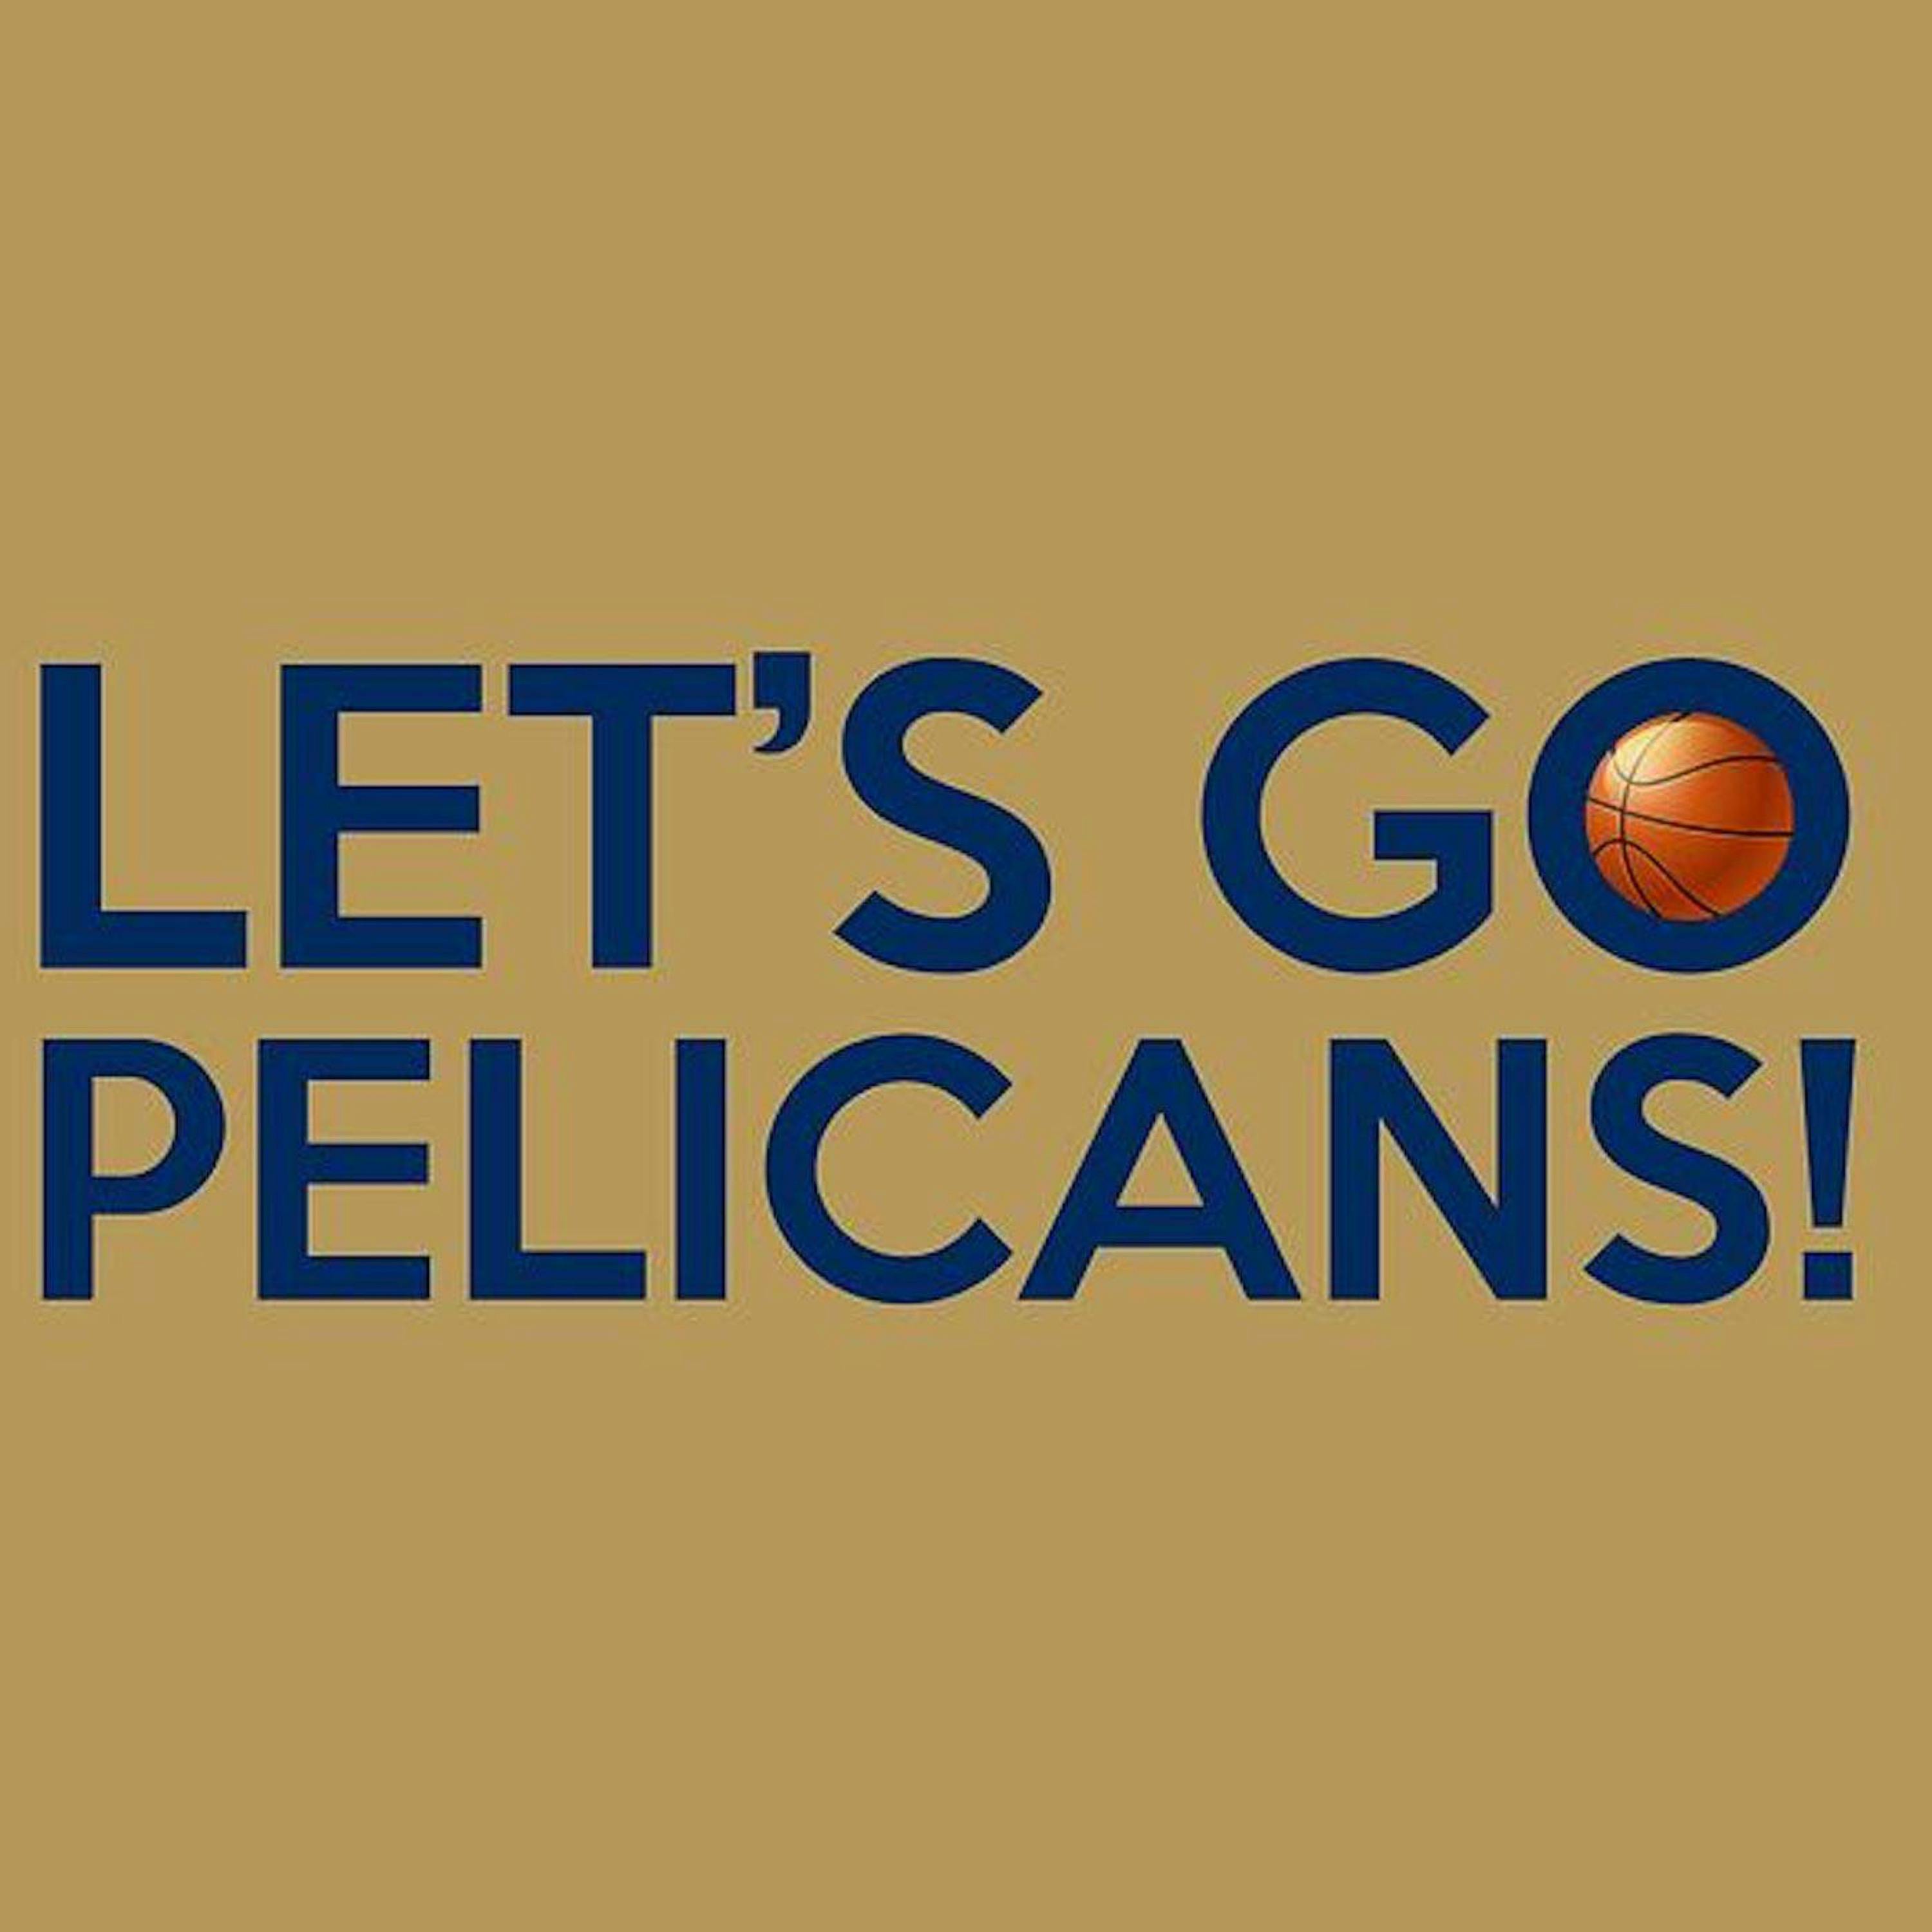 Go Pelicans!